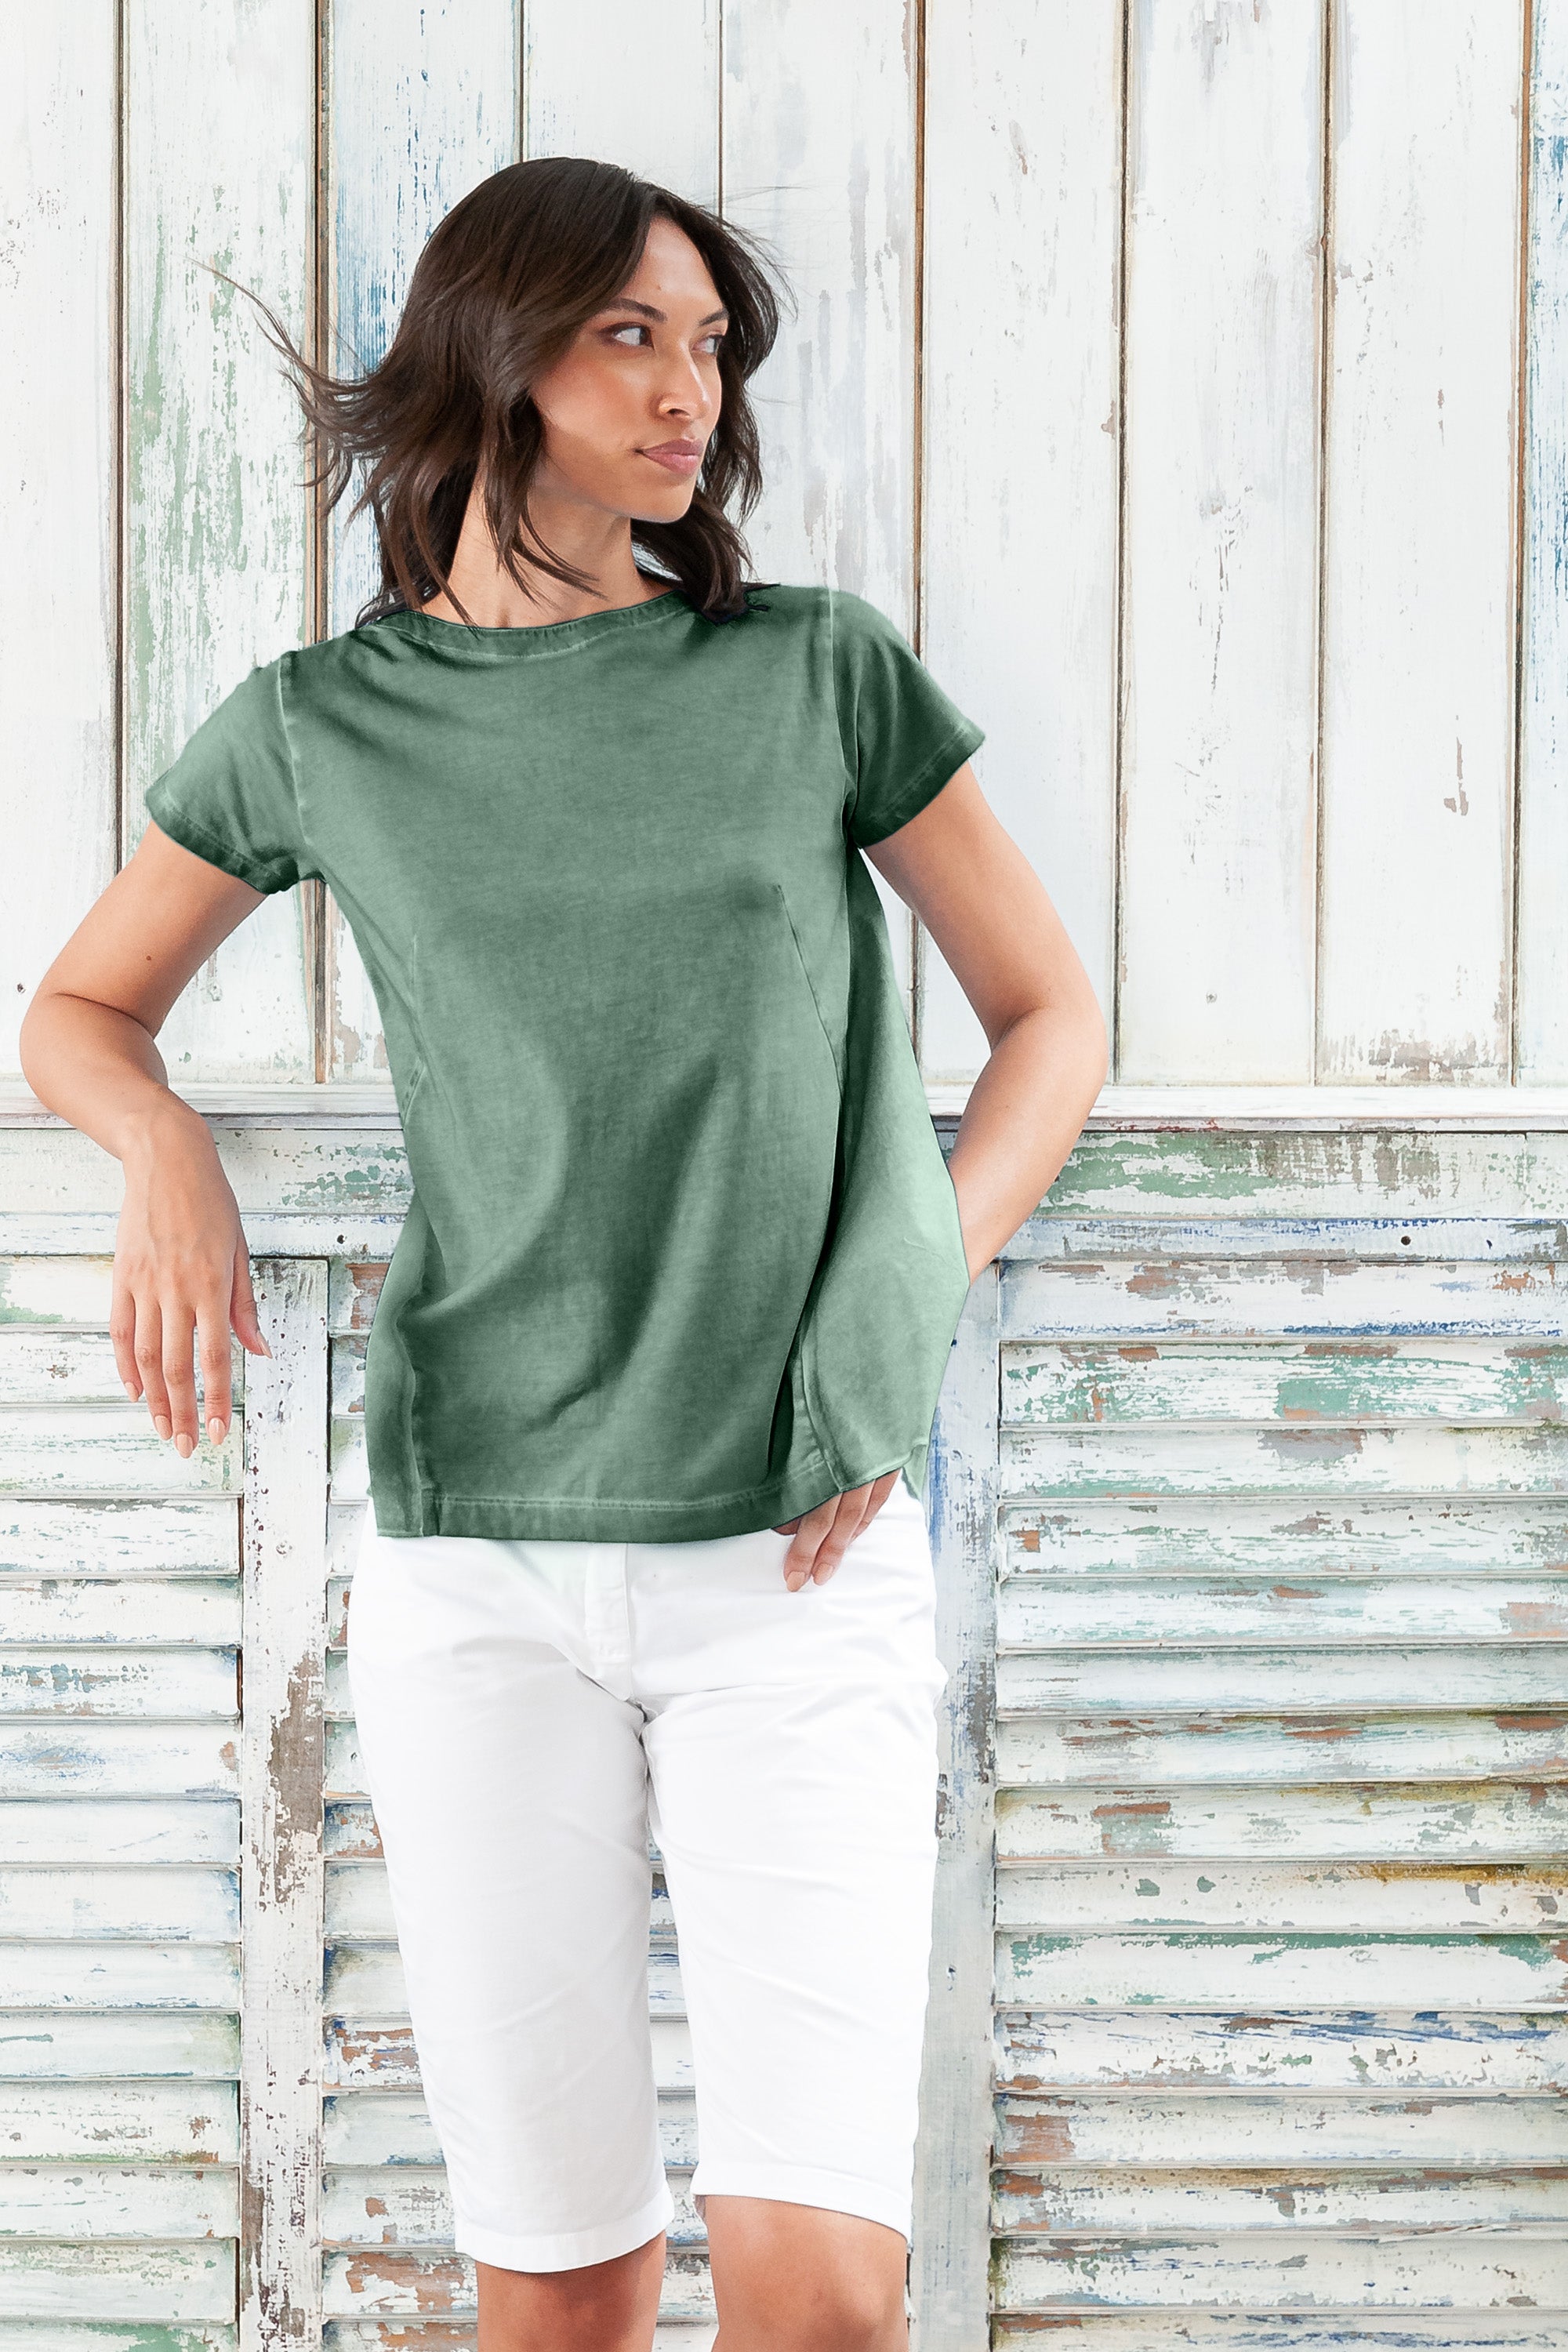 Flashback T-Shirt - Women's Stretchy Cotton T-Shirt - Juniper